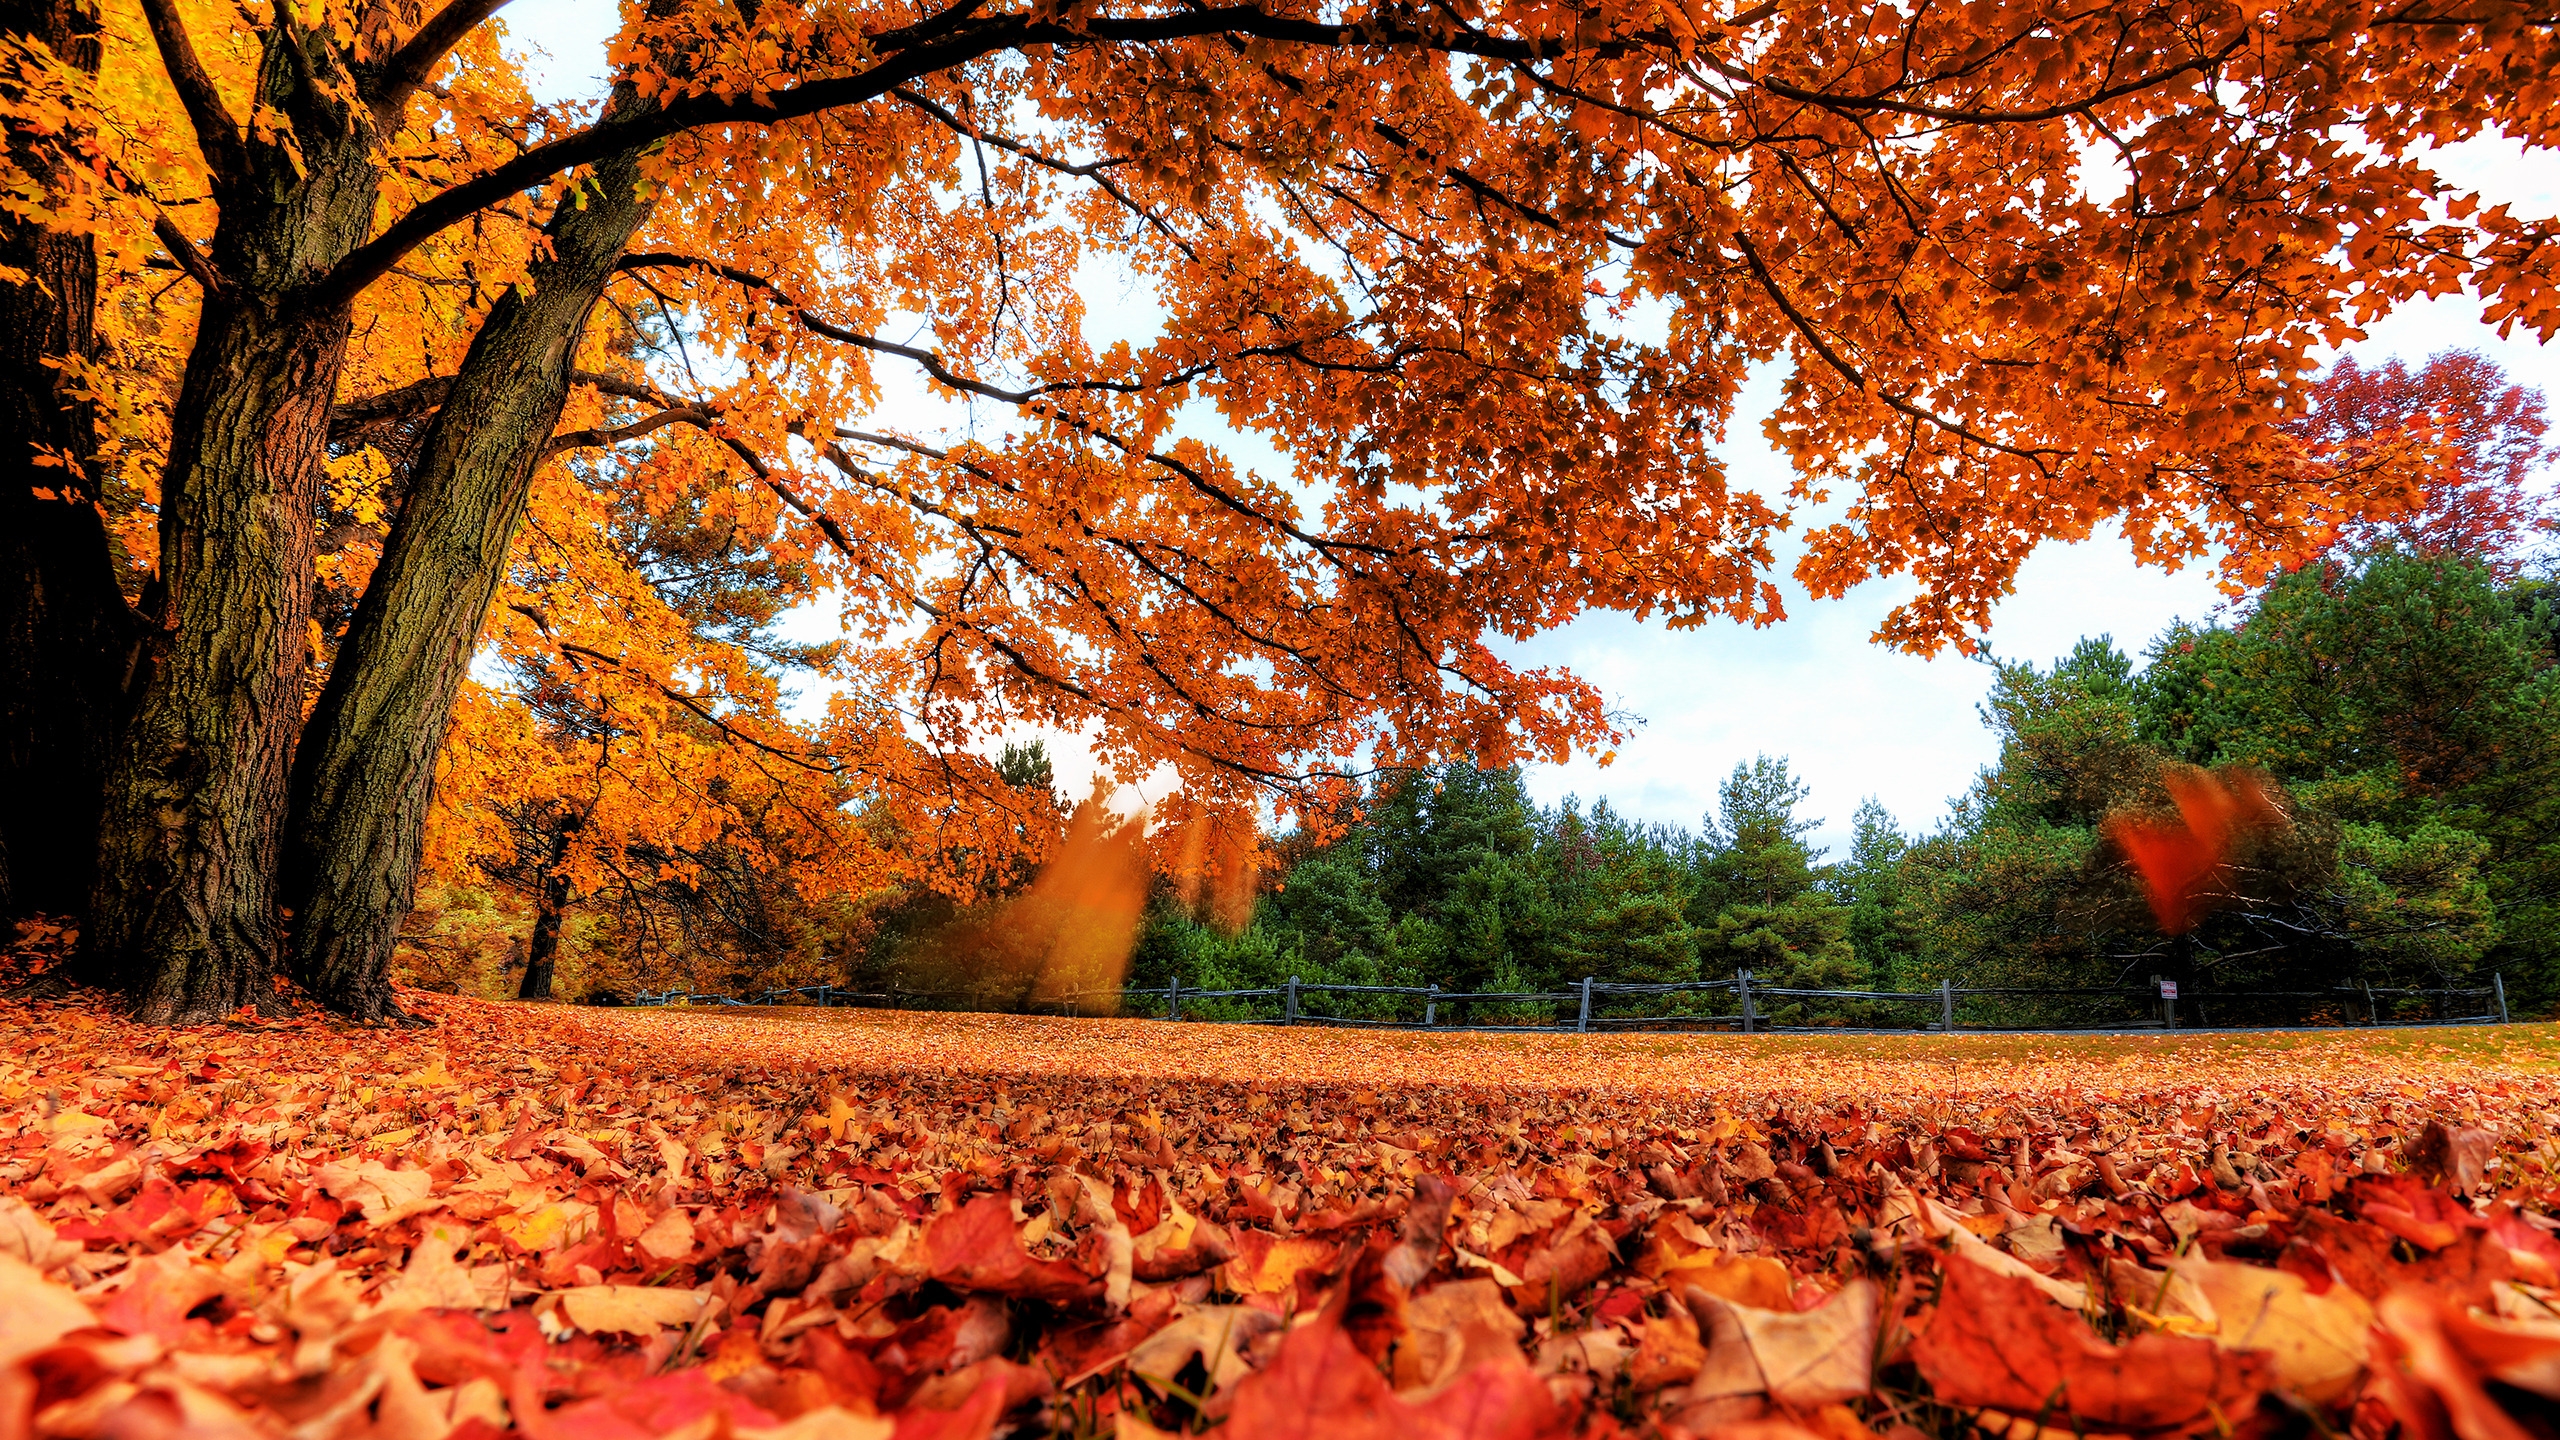 Autumn Maple Tree for 2560x1440 HDTV resolution